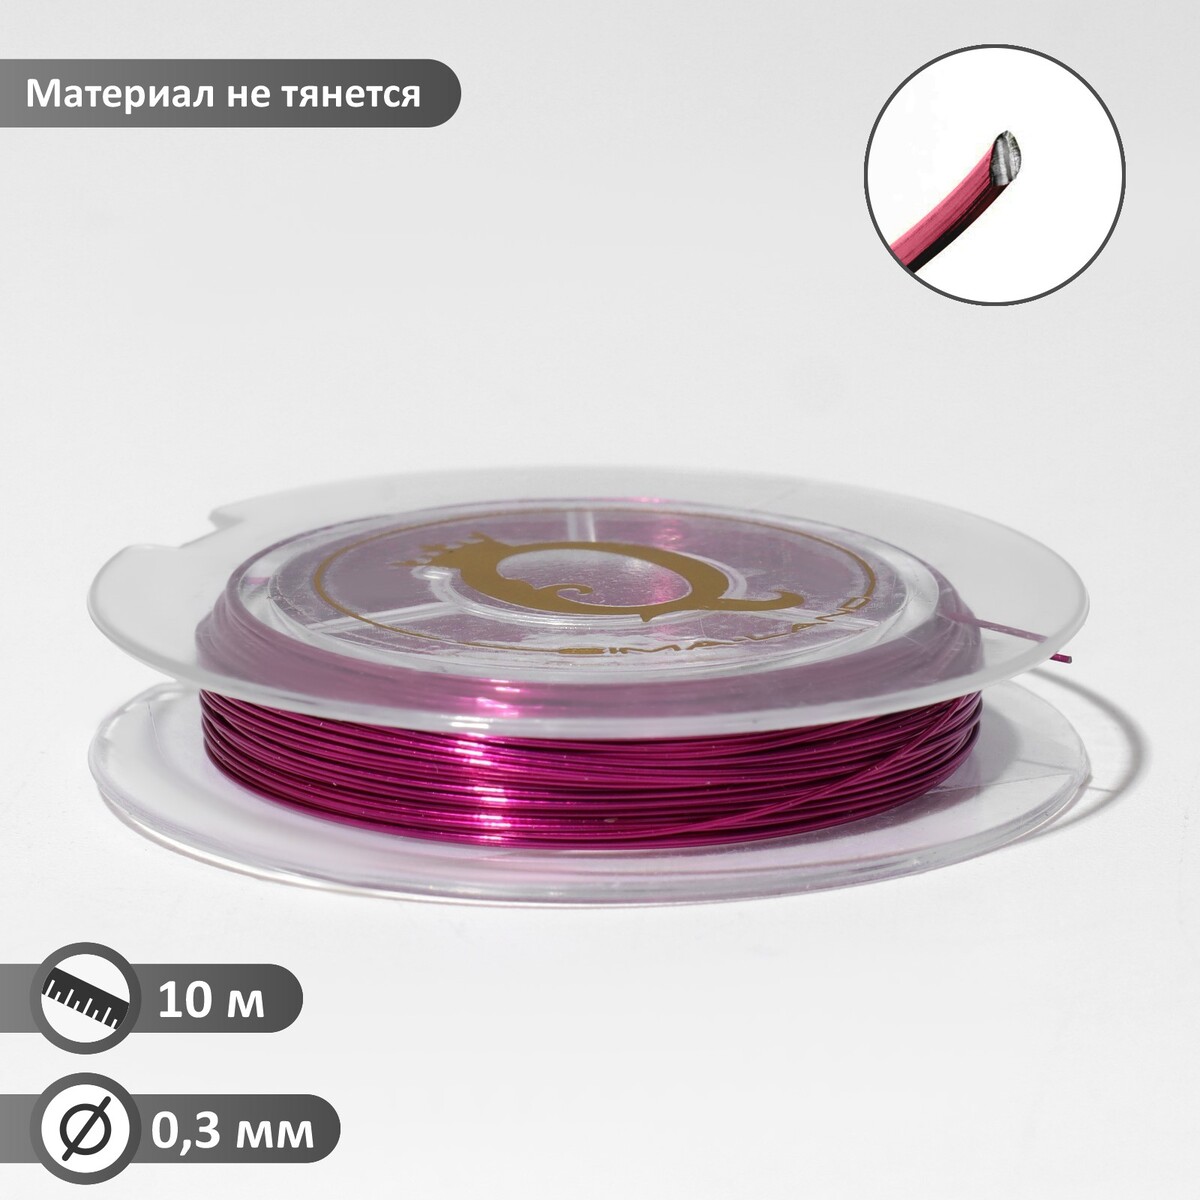 Проволока на бобине, d=0,3 мм, l=10 м, цвет ярко-розовый проволока на бобине d 0 3мм l 10м фиолетовый